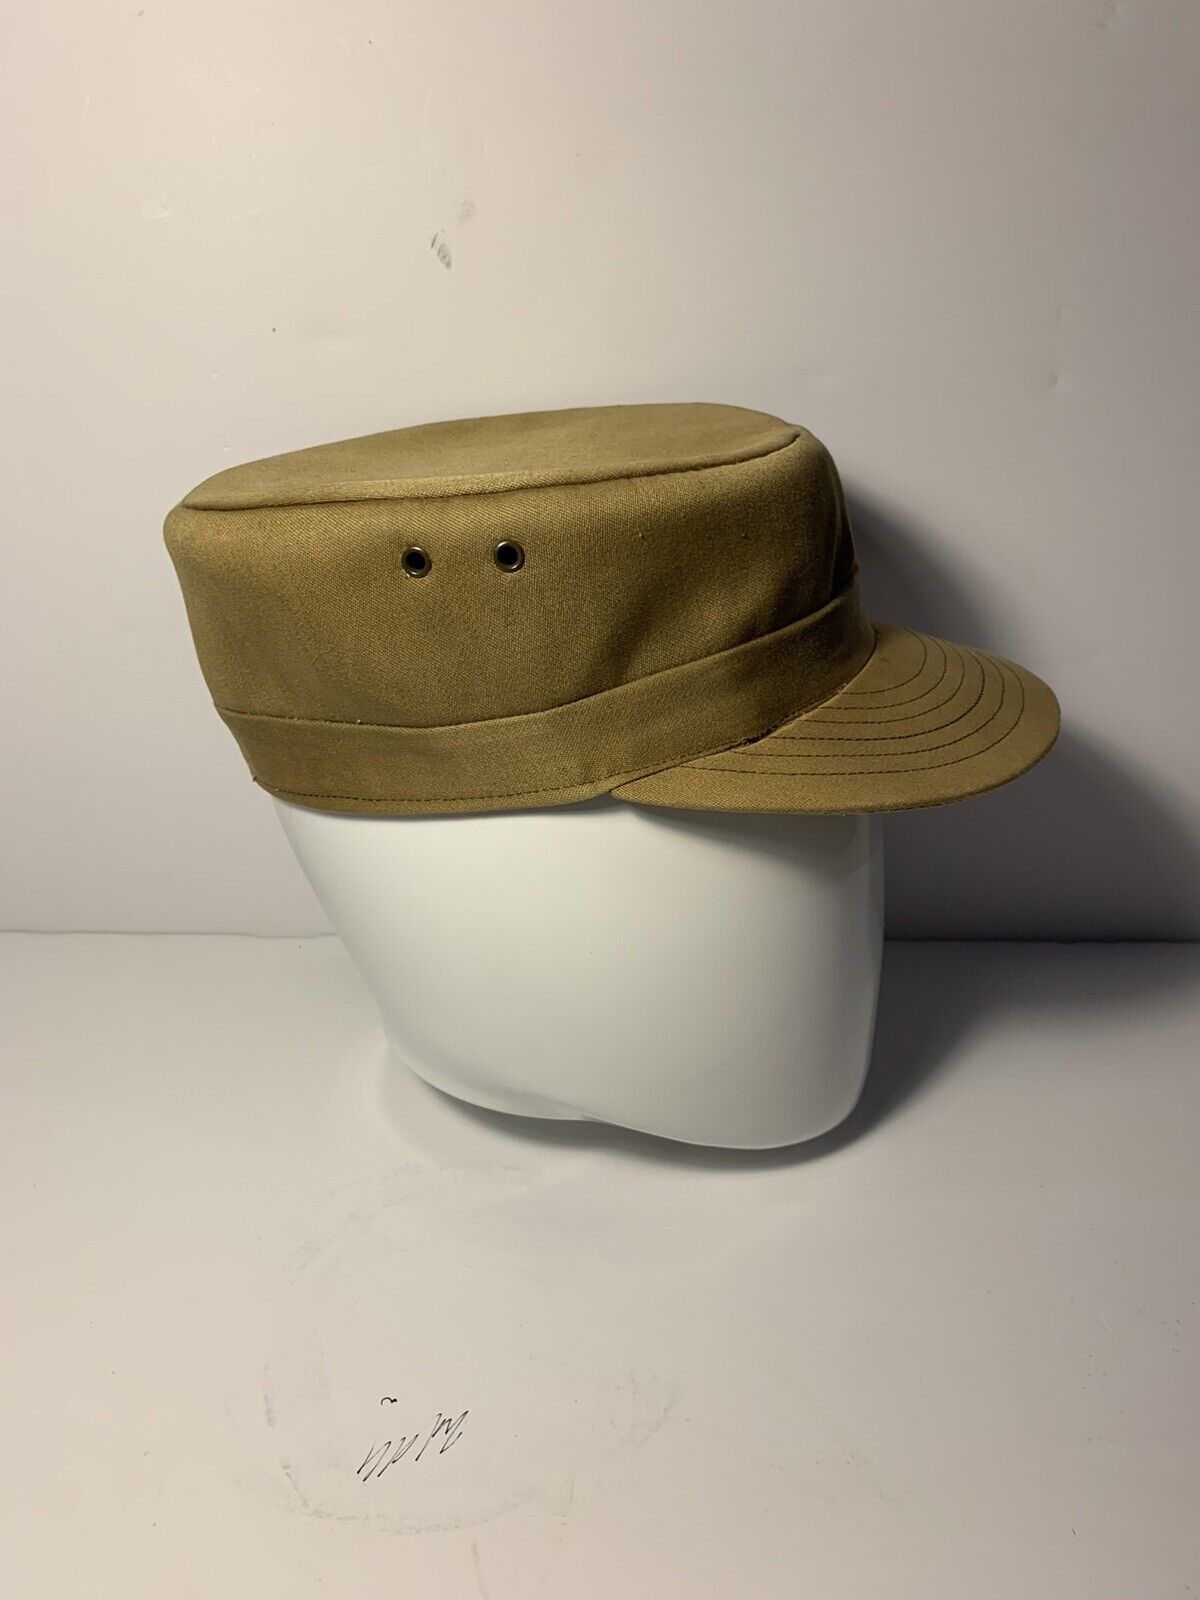 US WW2 M1943 Cotton Field Cap Hat (with Ear Flaps) Size 7 3/8 Reproduction Khaki